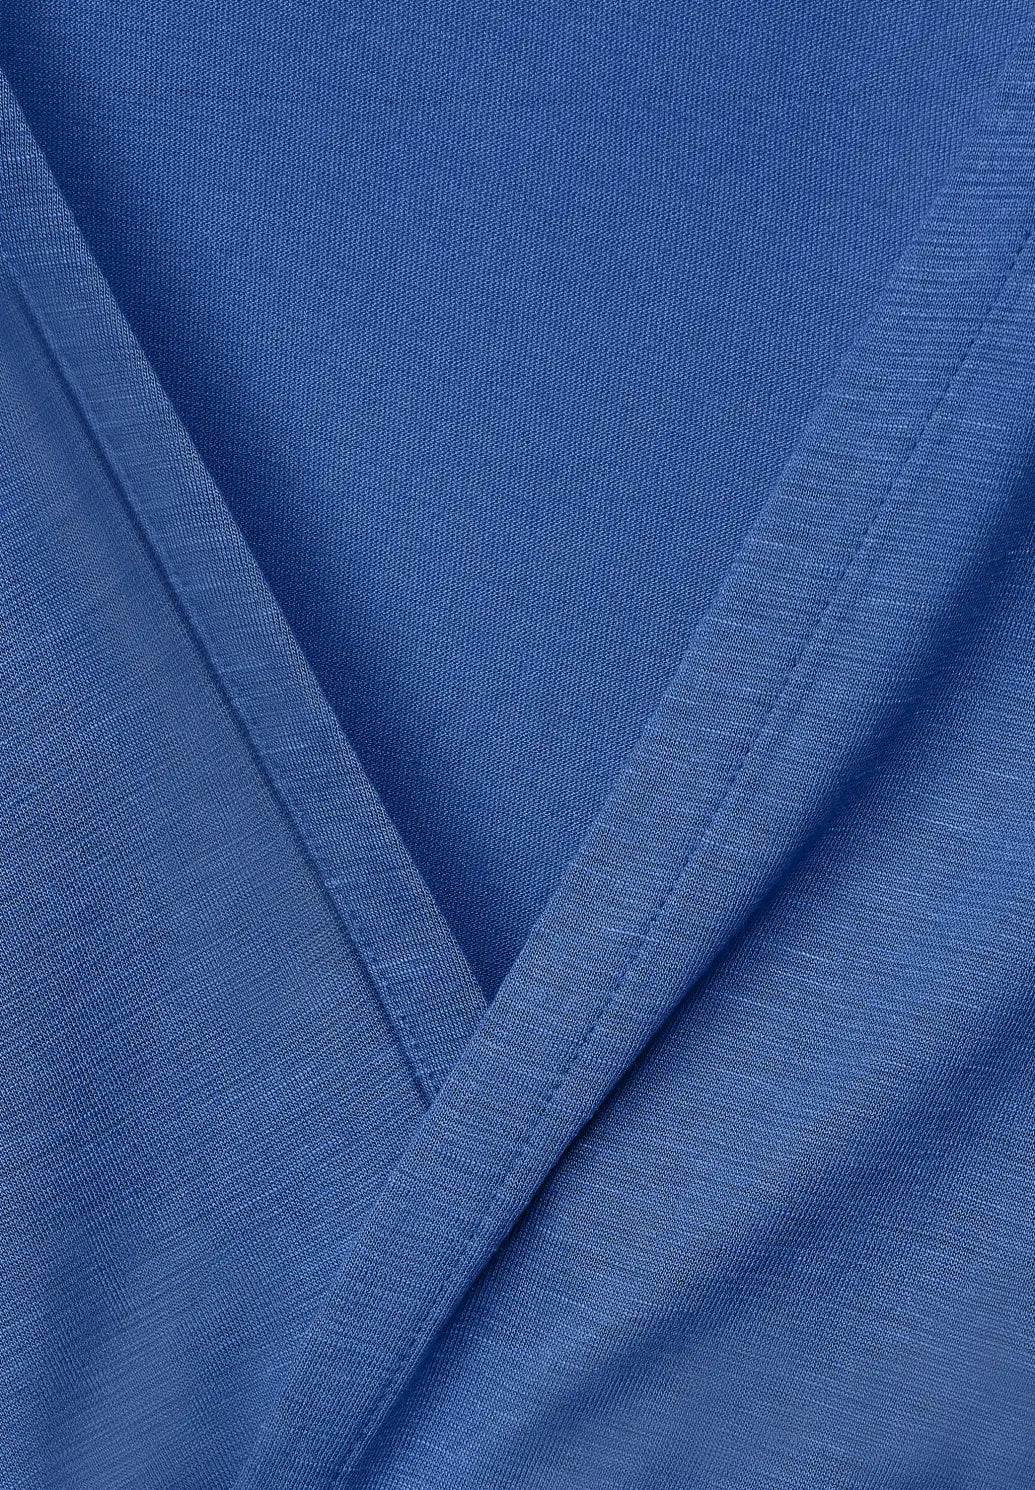 Cecil lightweight summer cardigan in blue sea 319632